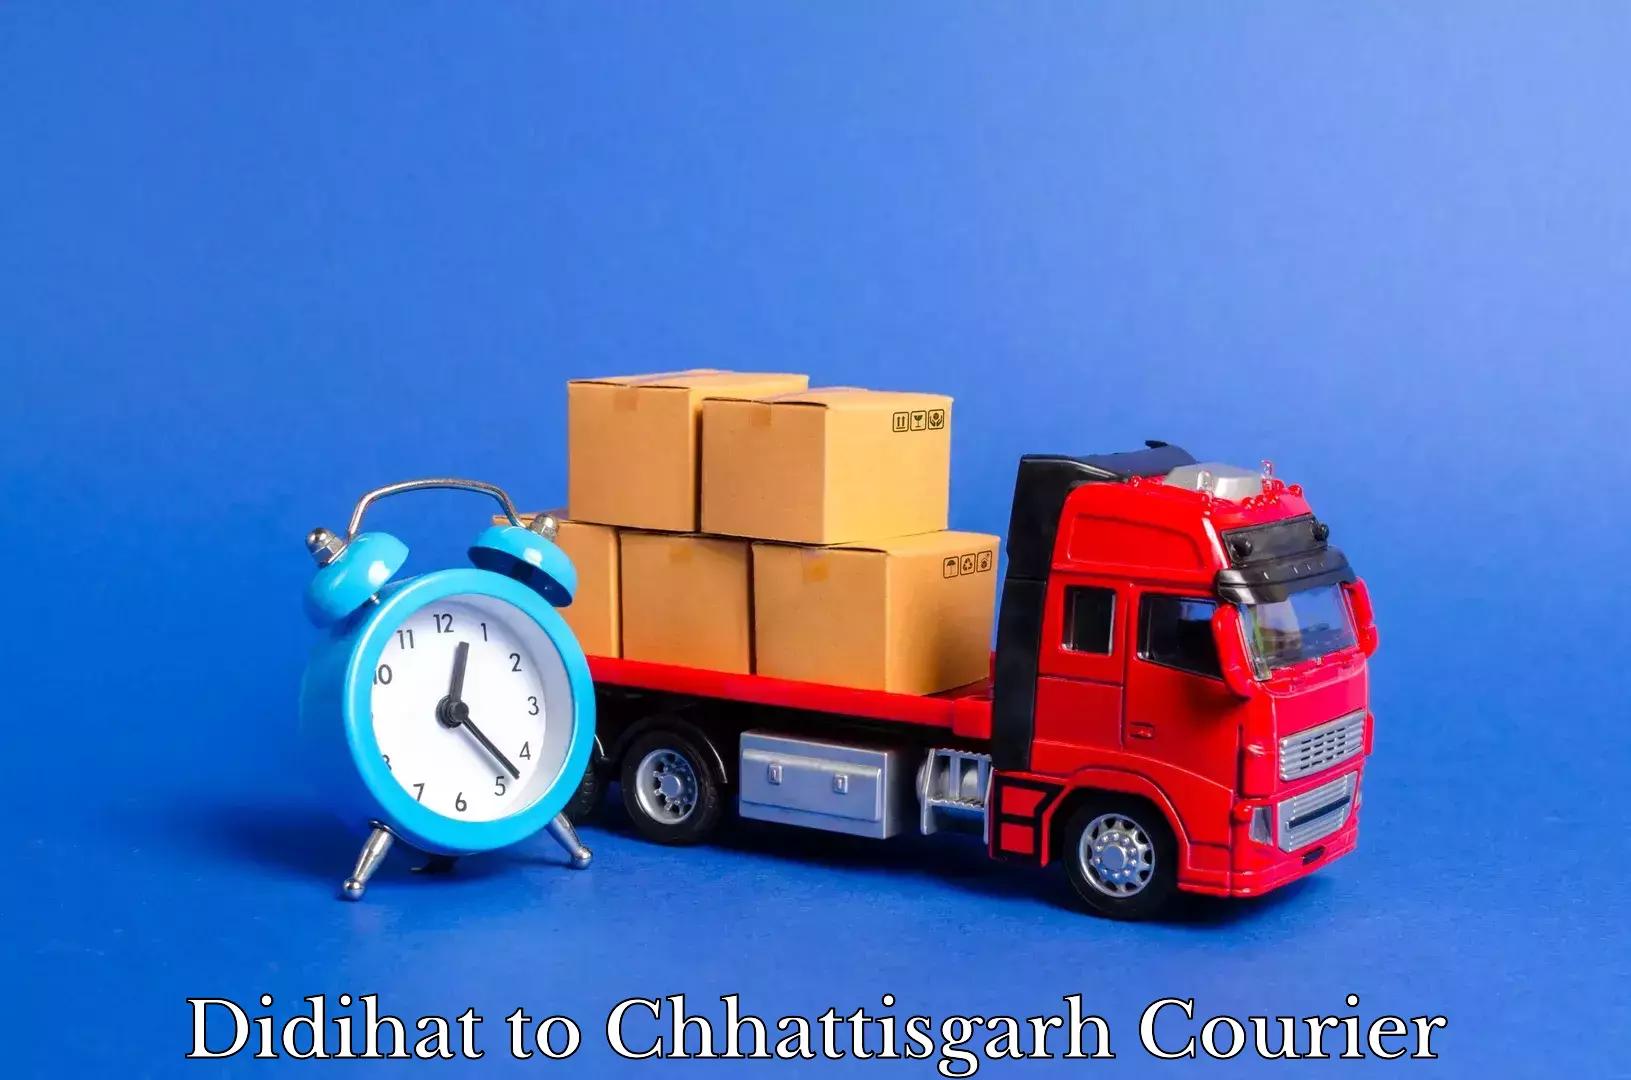 Professional relocation services in Didihat to Chhattisgarh